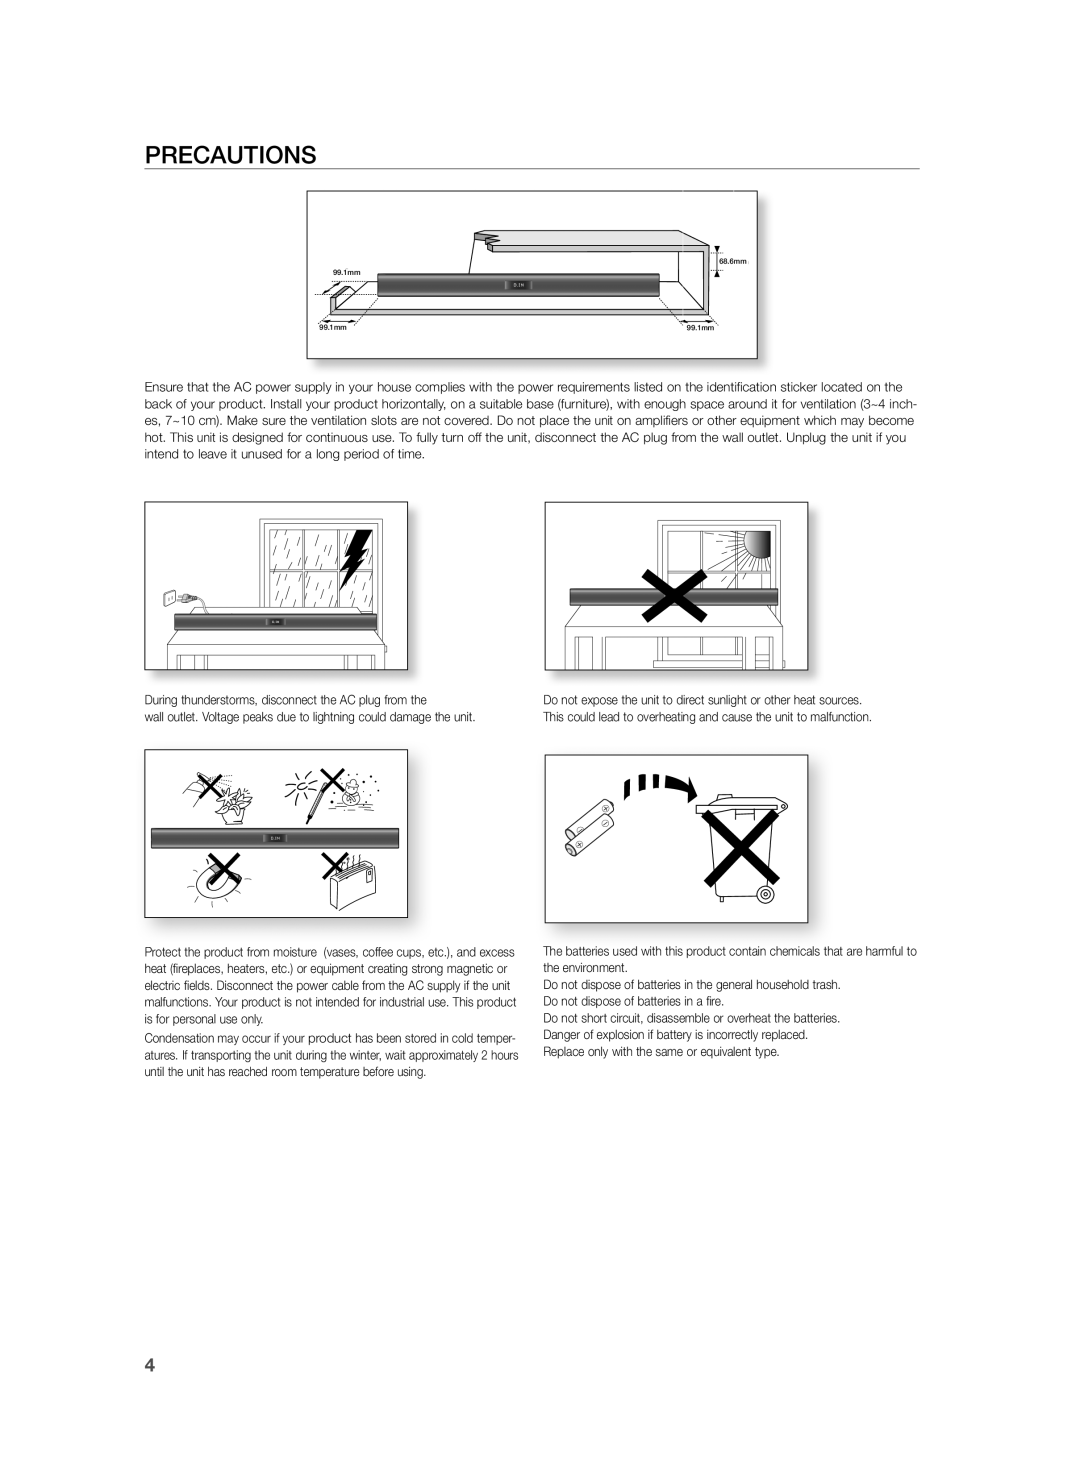 Samsung HW-H355/XE manual Precautions 